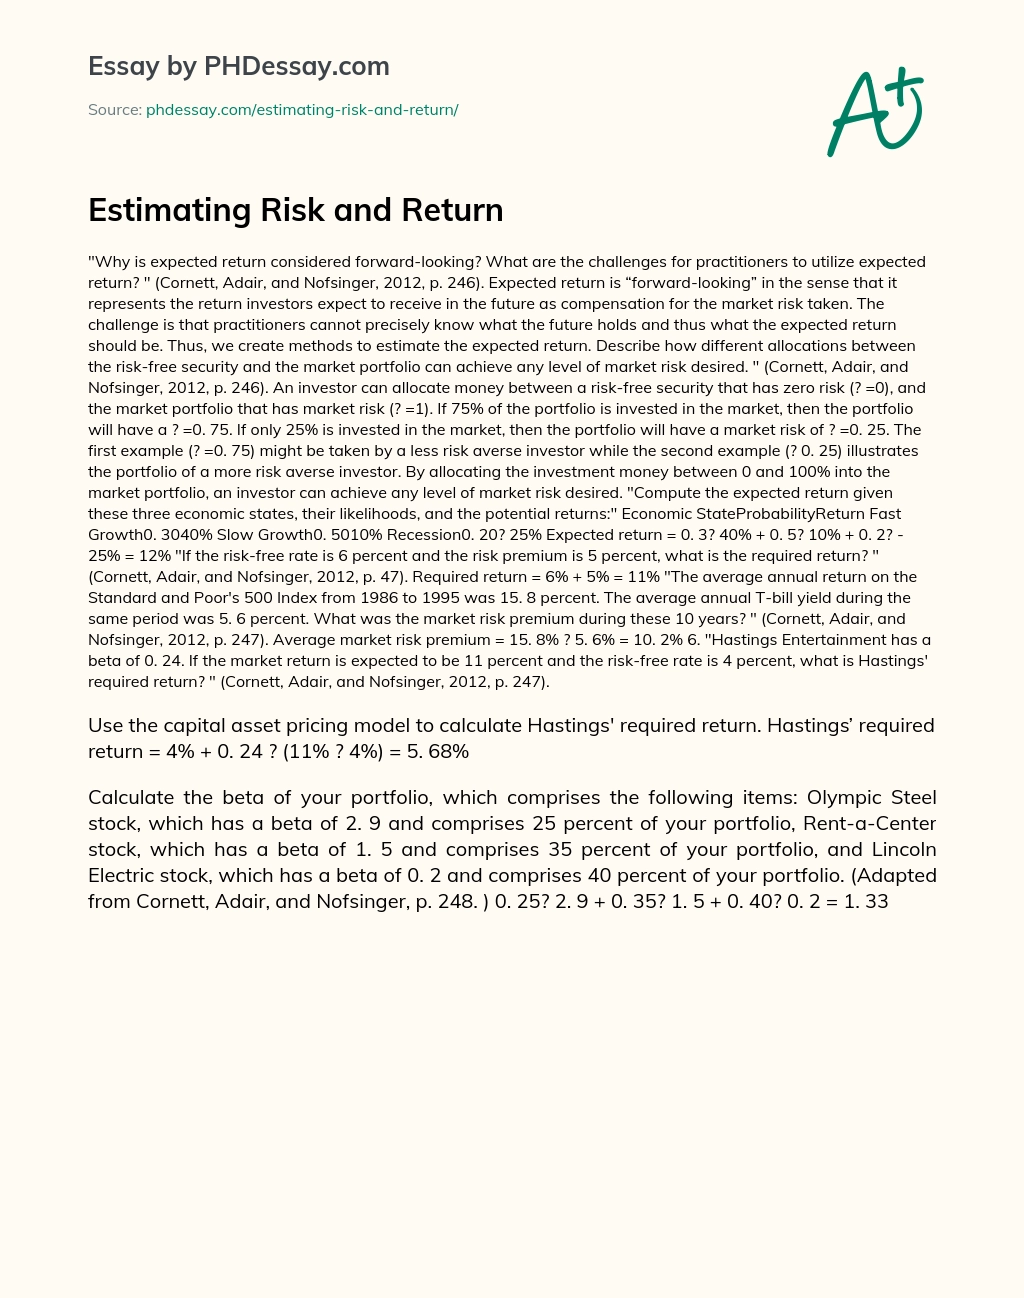 Estimating Risk and Return essay